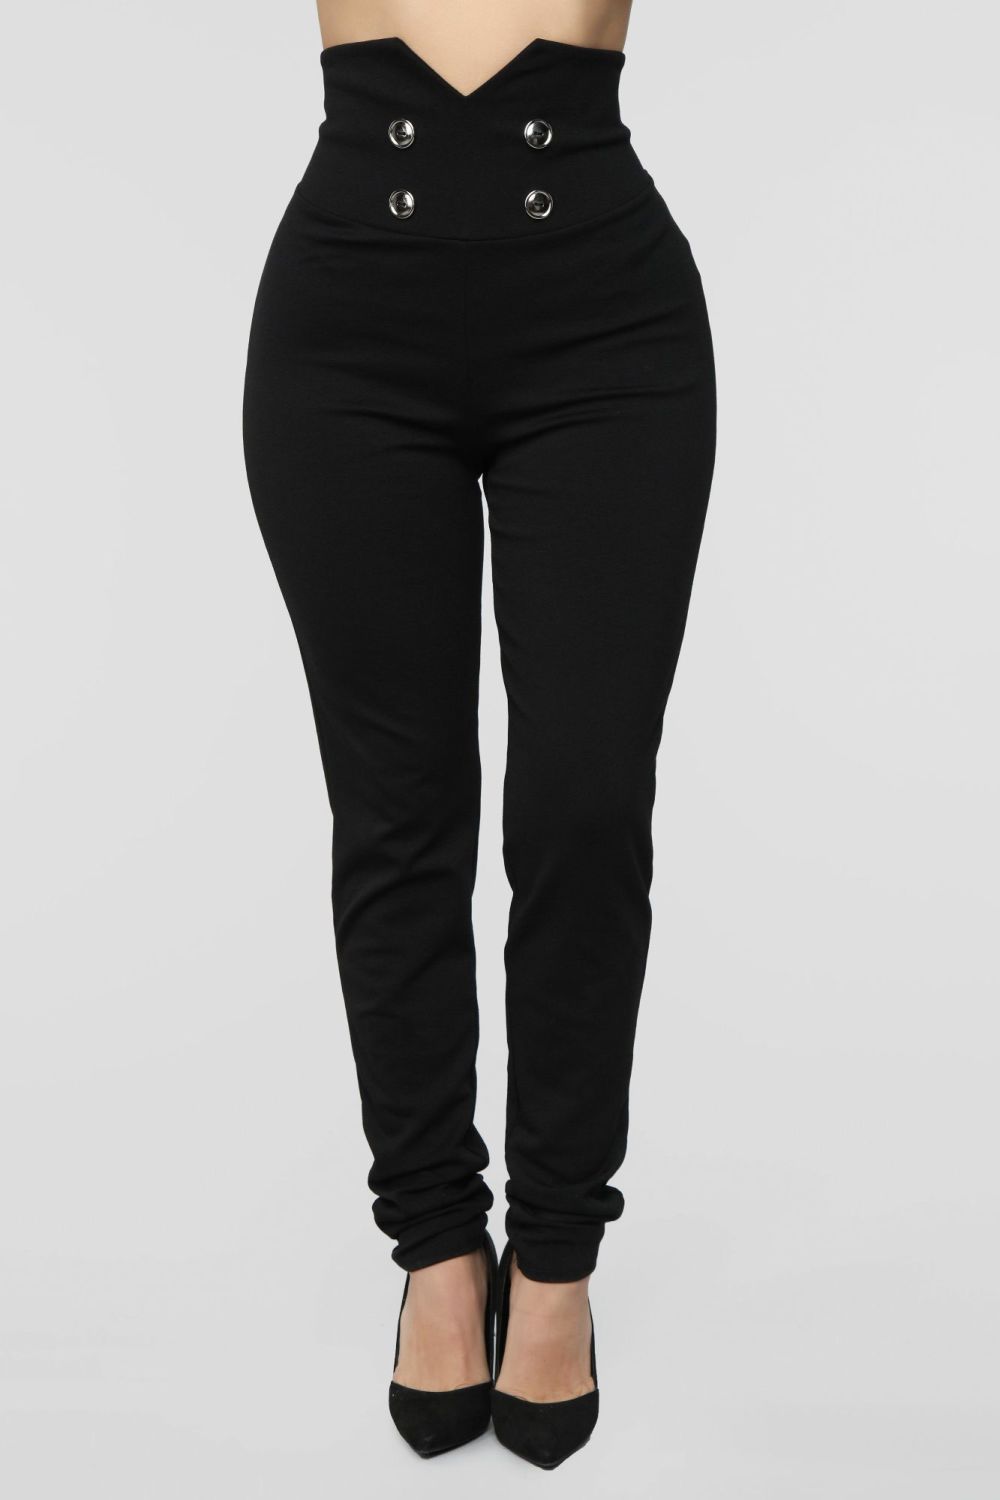 Black High Waist Stretch Skinny Pants|Size: 5